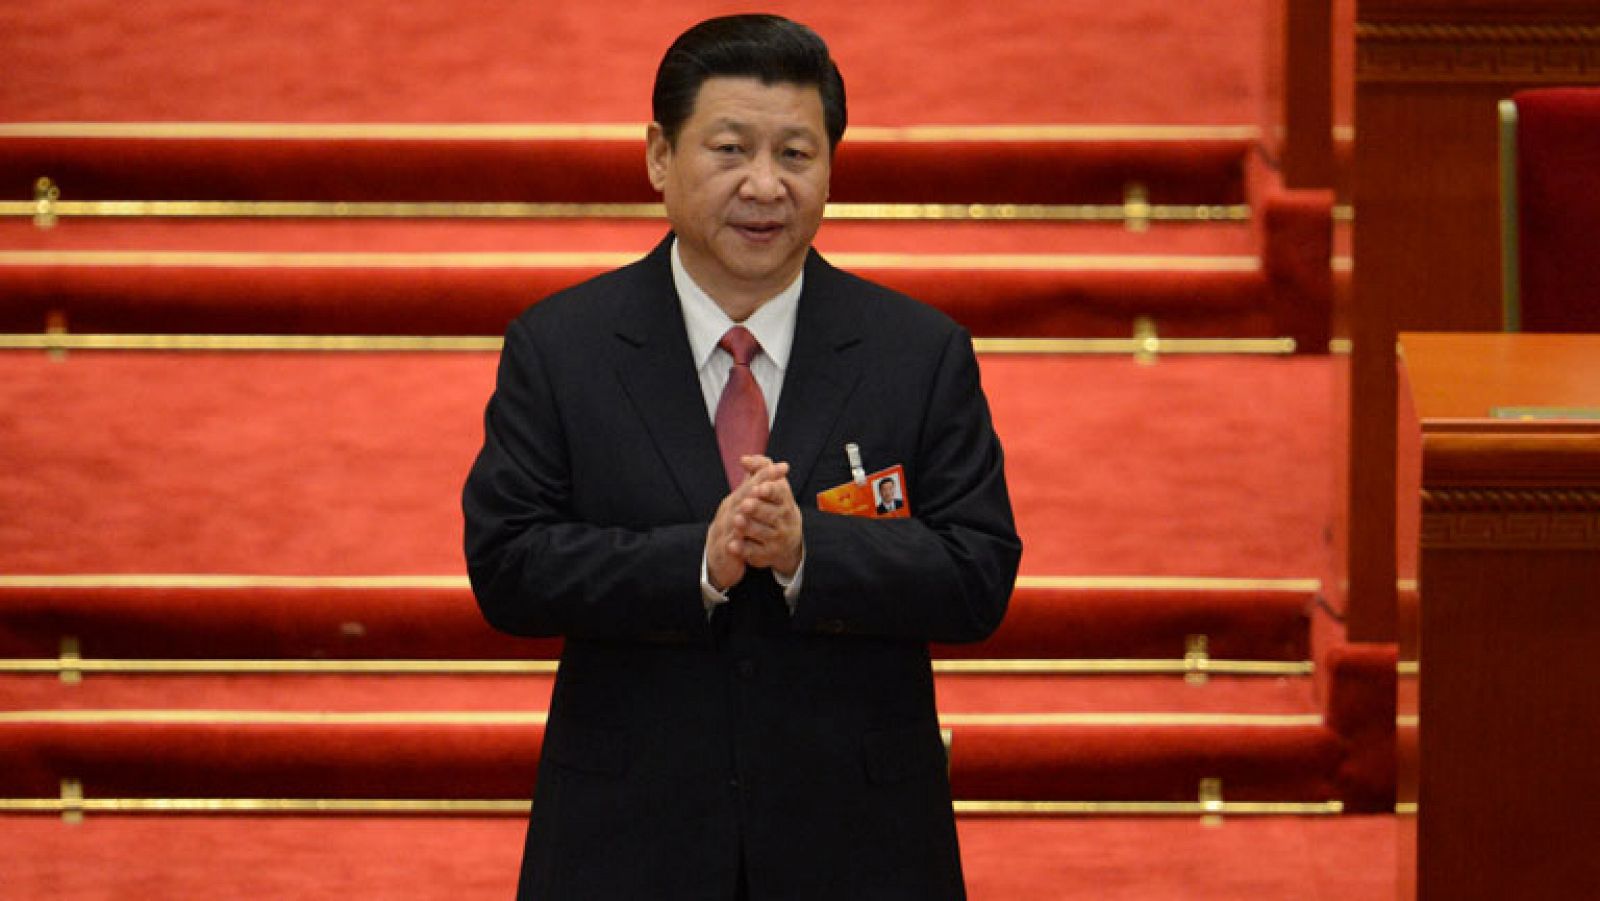 Telediario 1: Xi Jinping nuevo presidente chino | RTVE Play